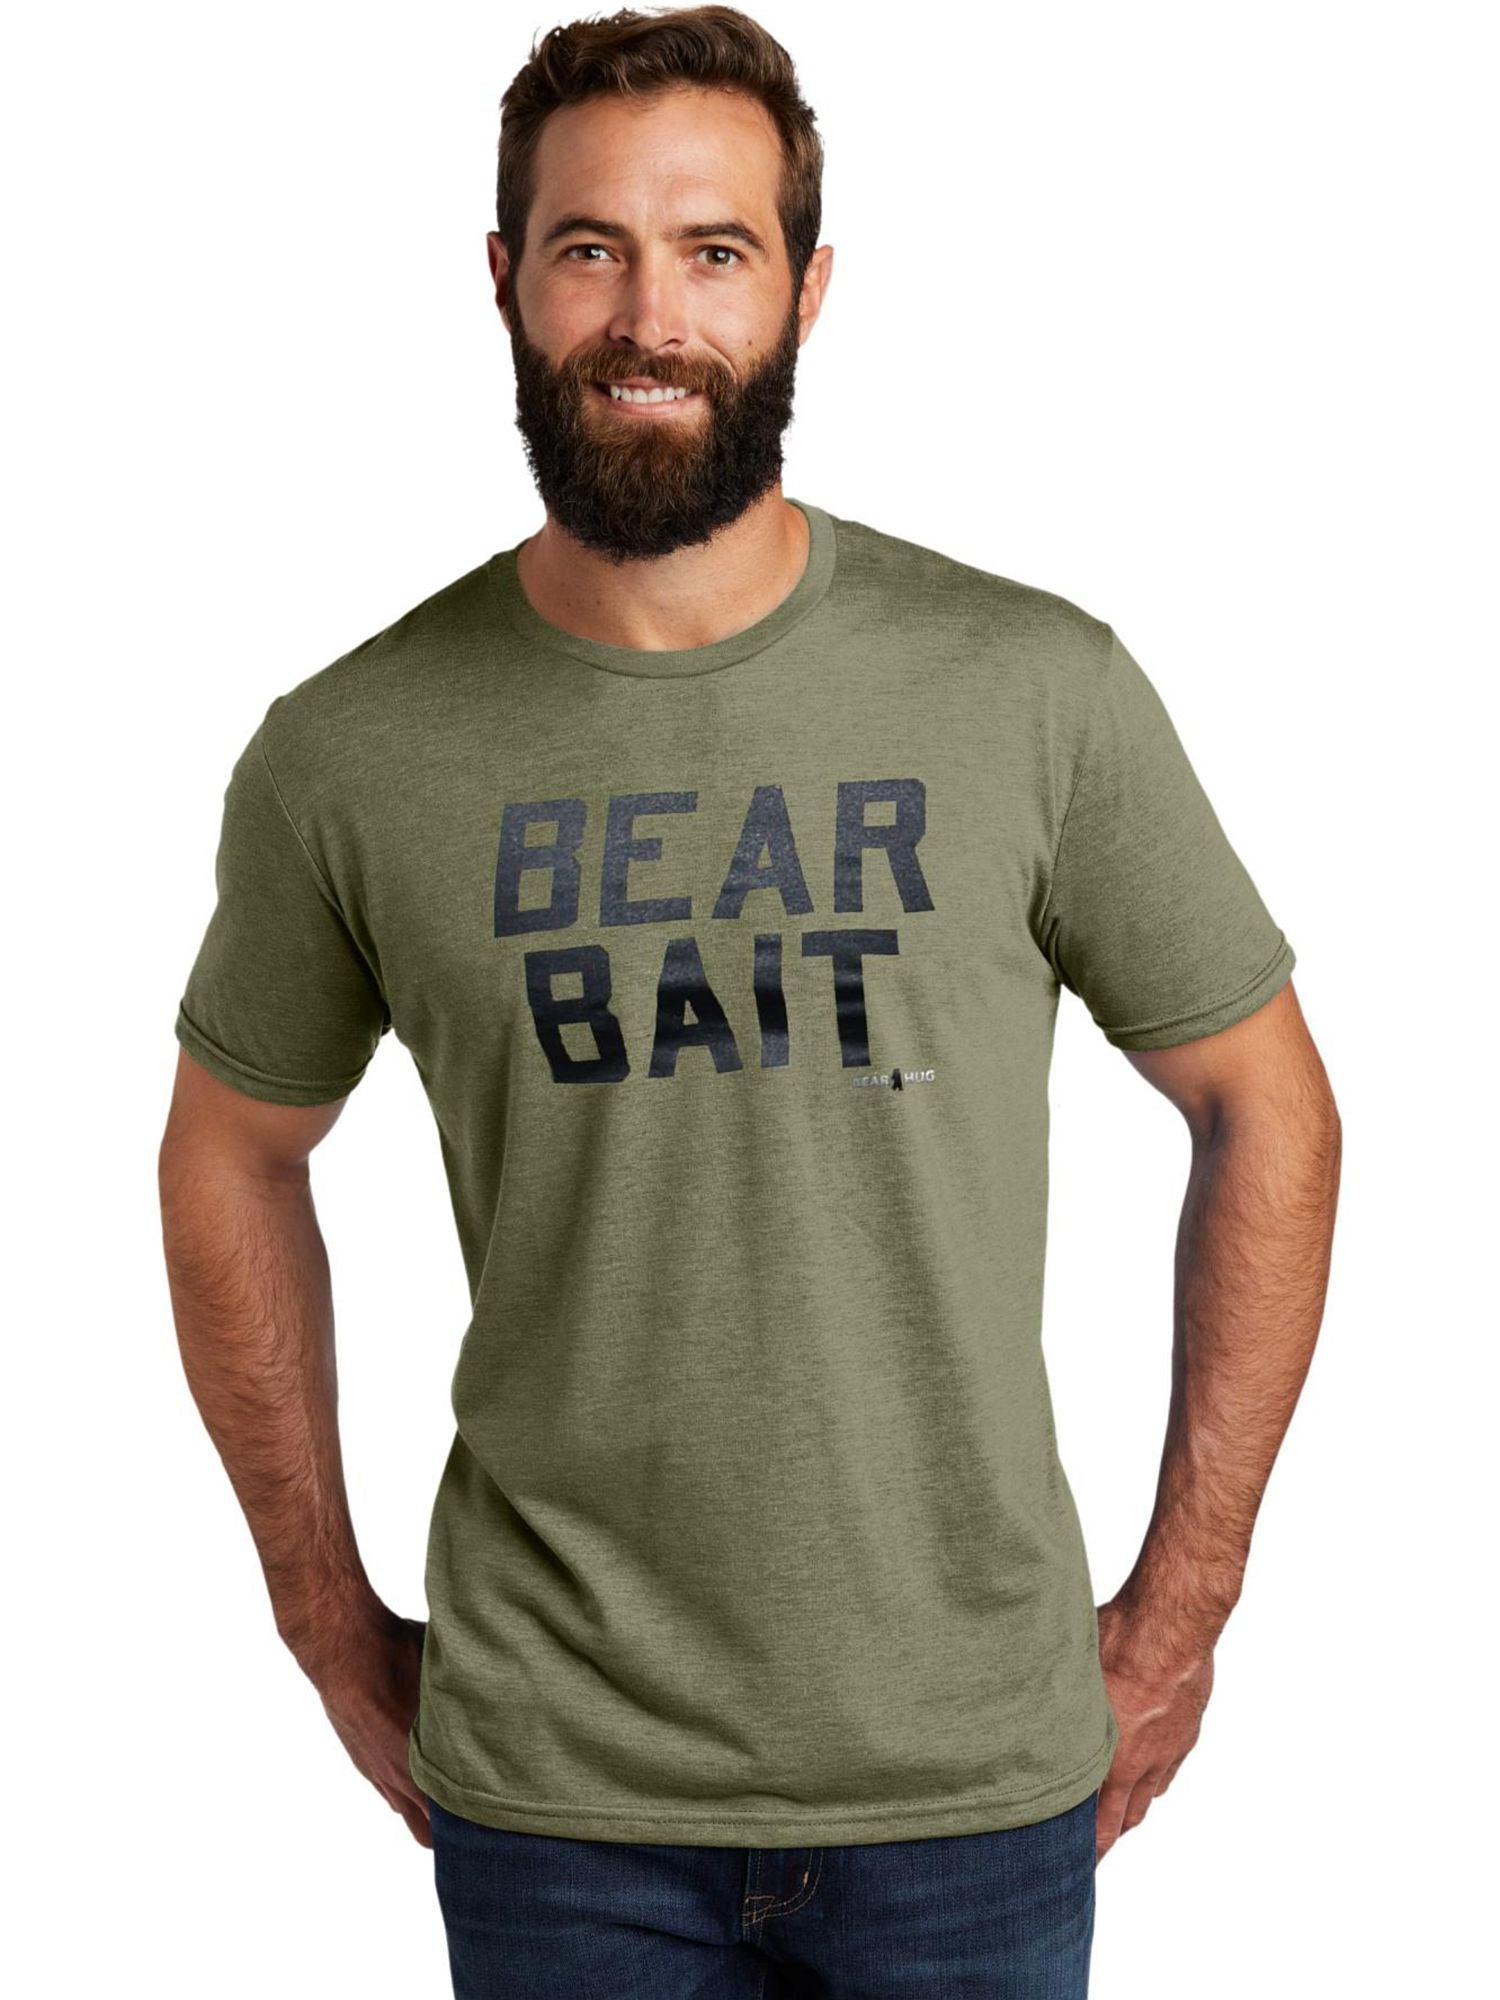 ajaxx63 BEAR BAIT, military green T-Shirt, print - noodosz